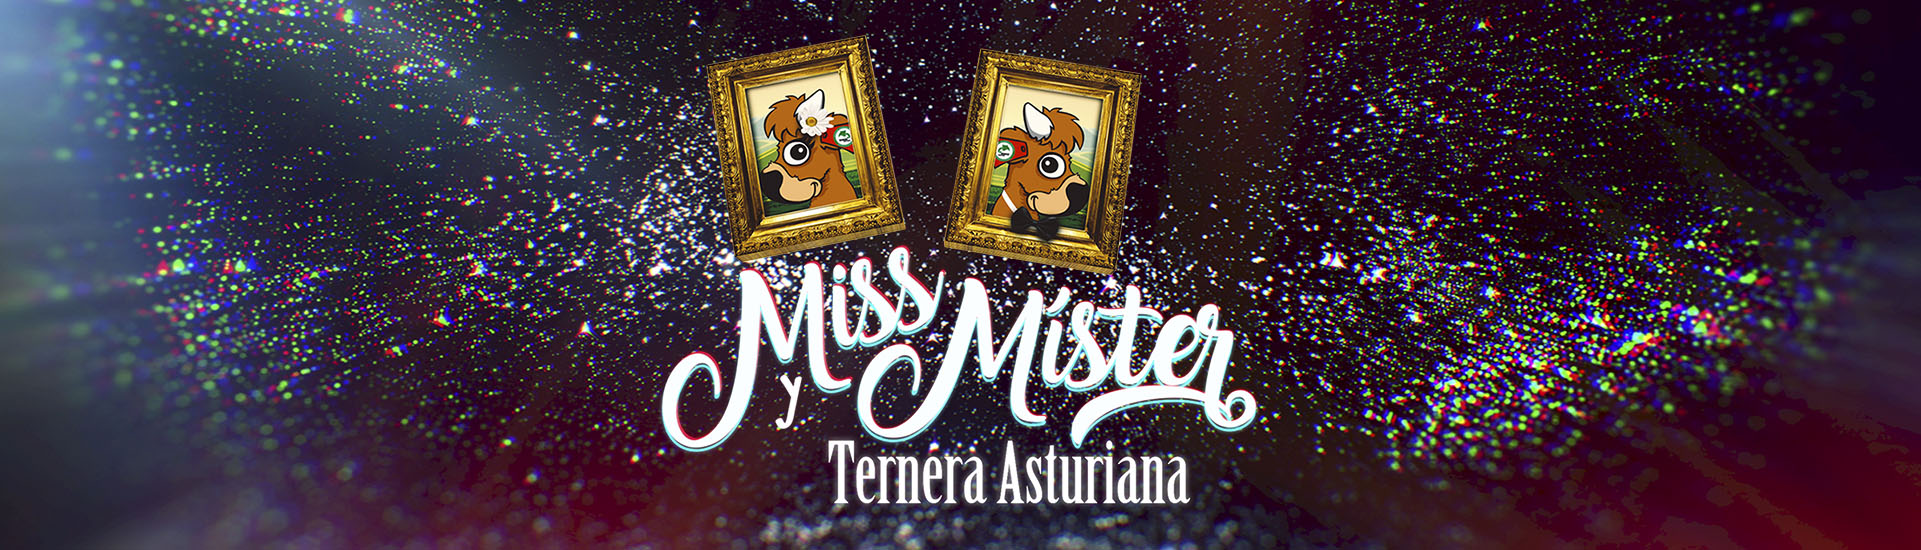 Bases | Miss y Mister Ternera Asturiana